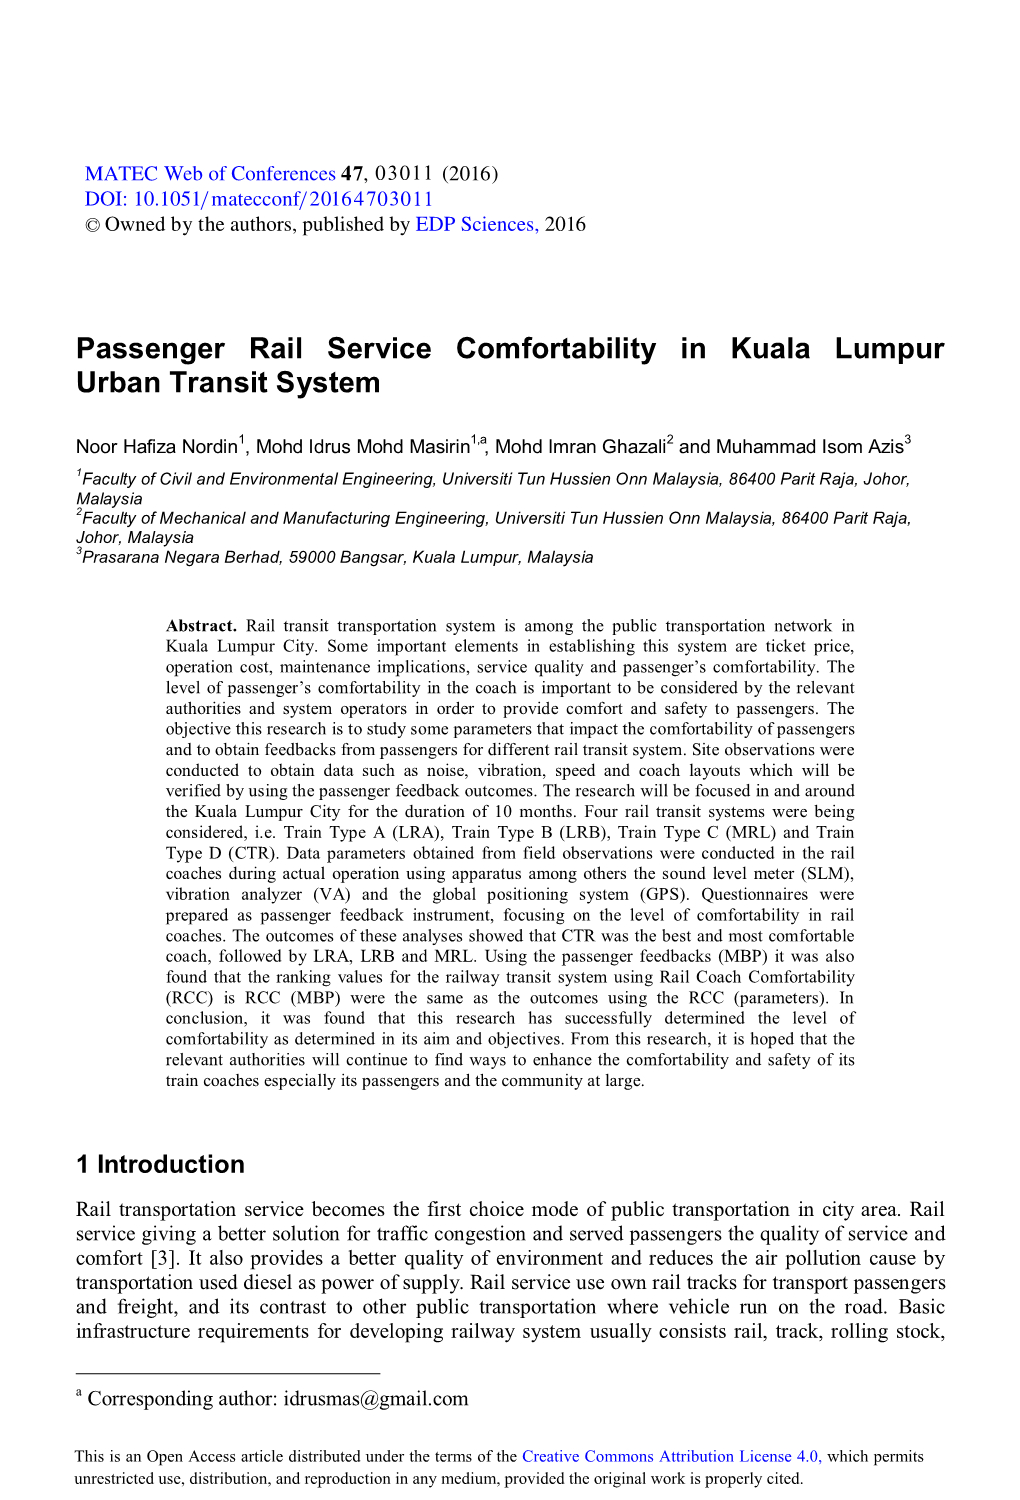 Passenger Rail Service Comfortability in Kuala Lumpur Urban Transit System